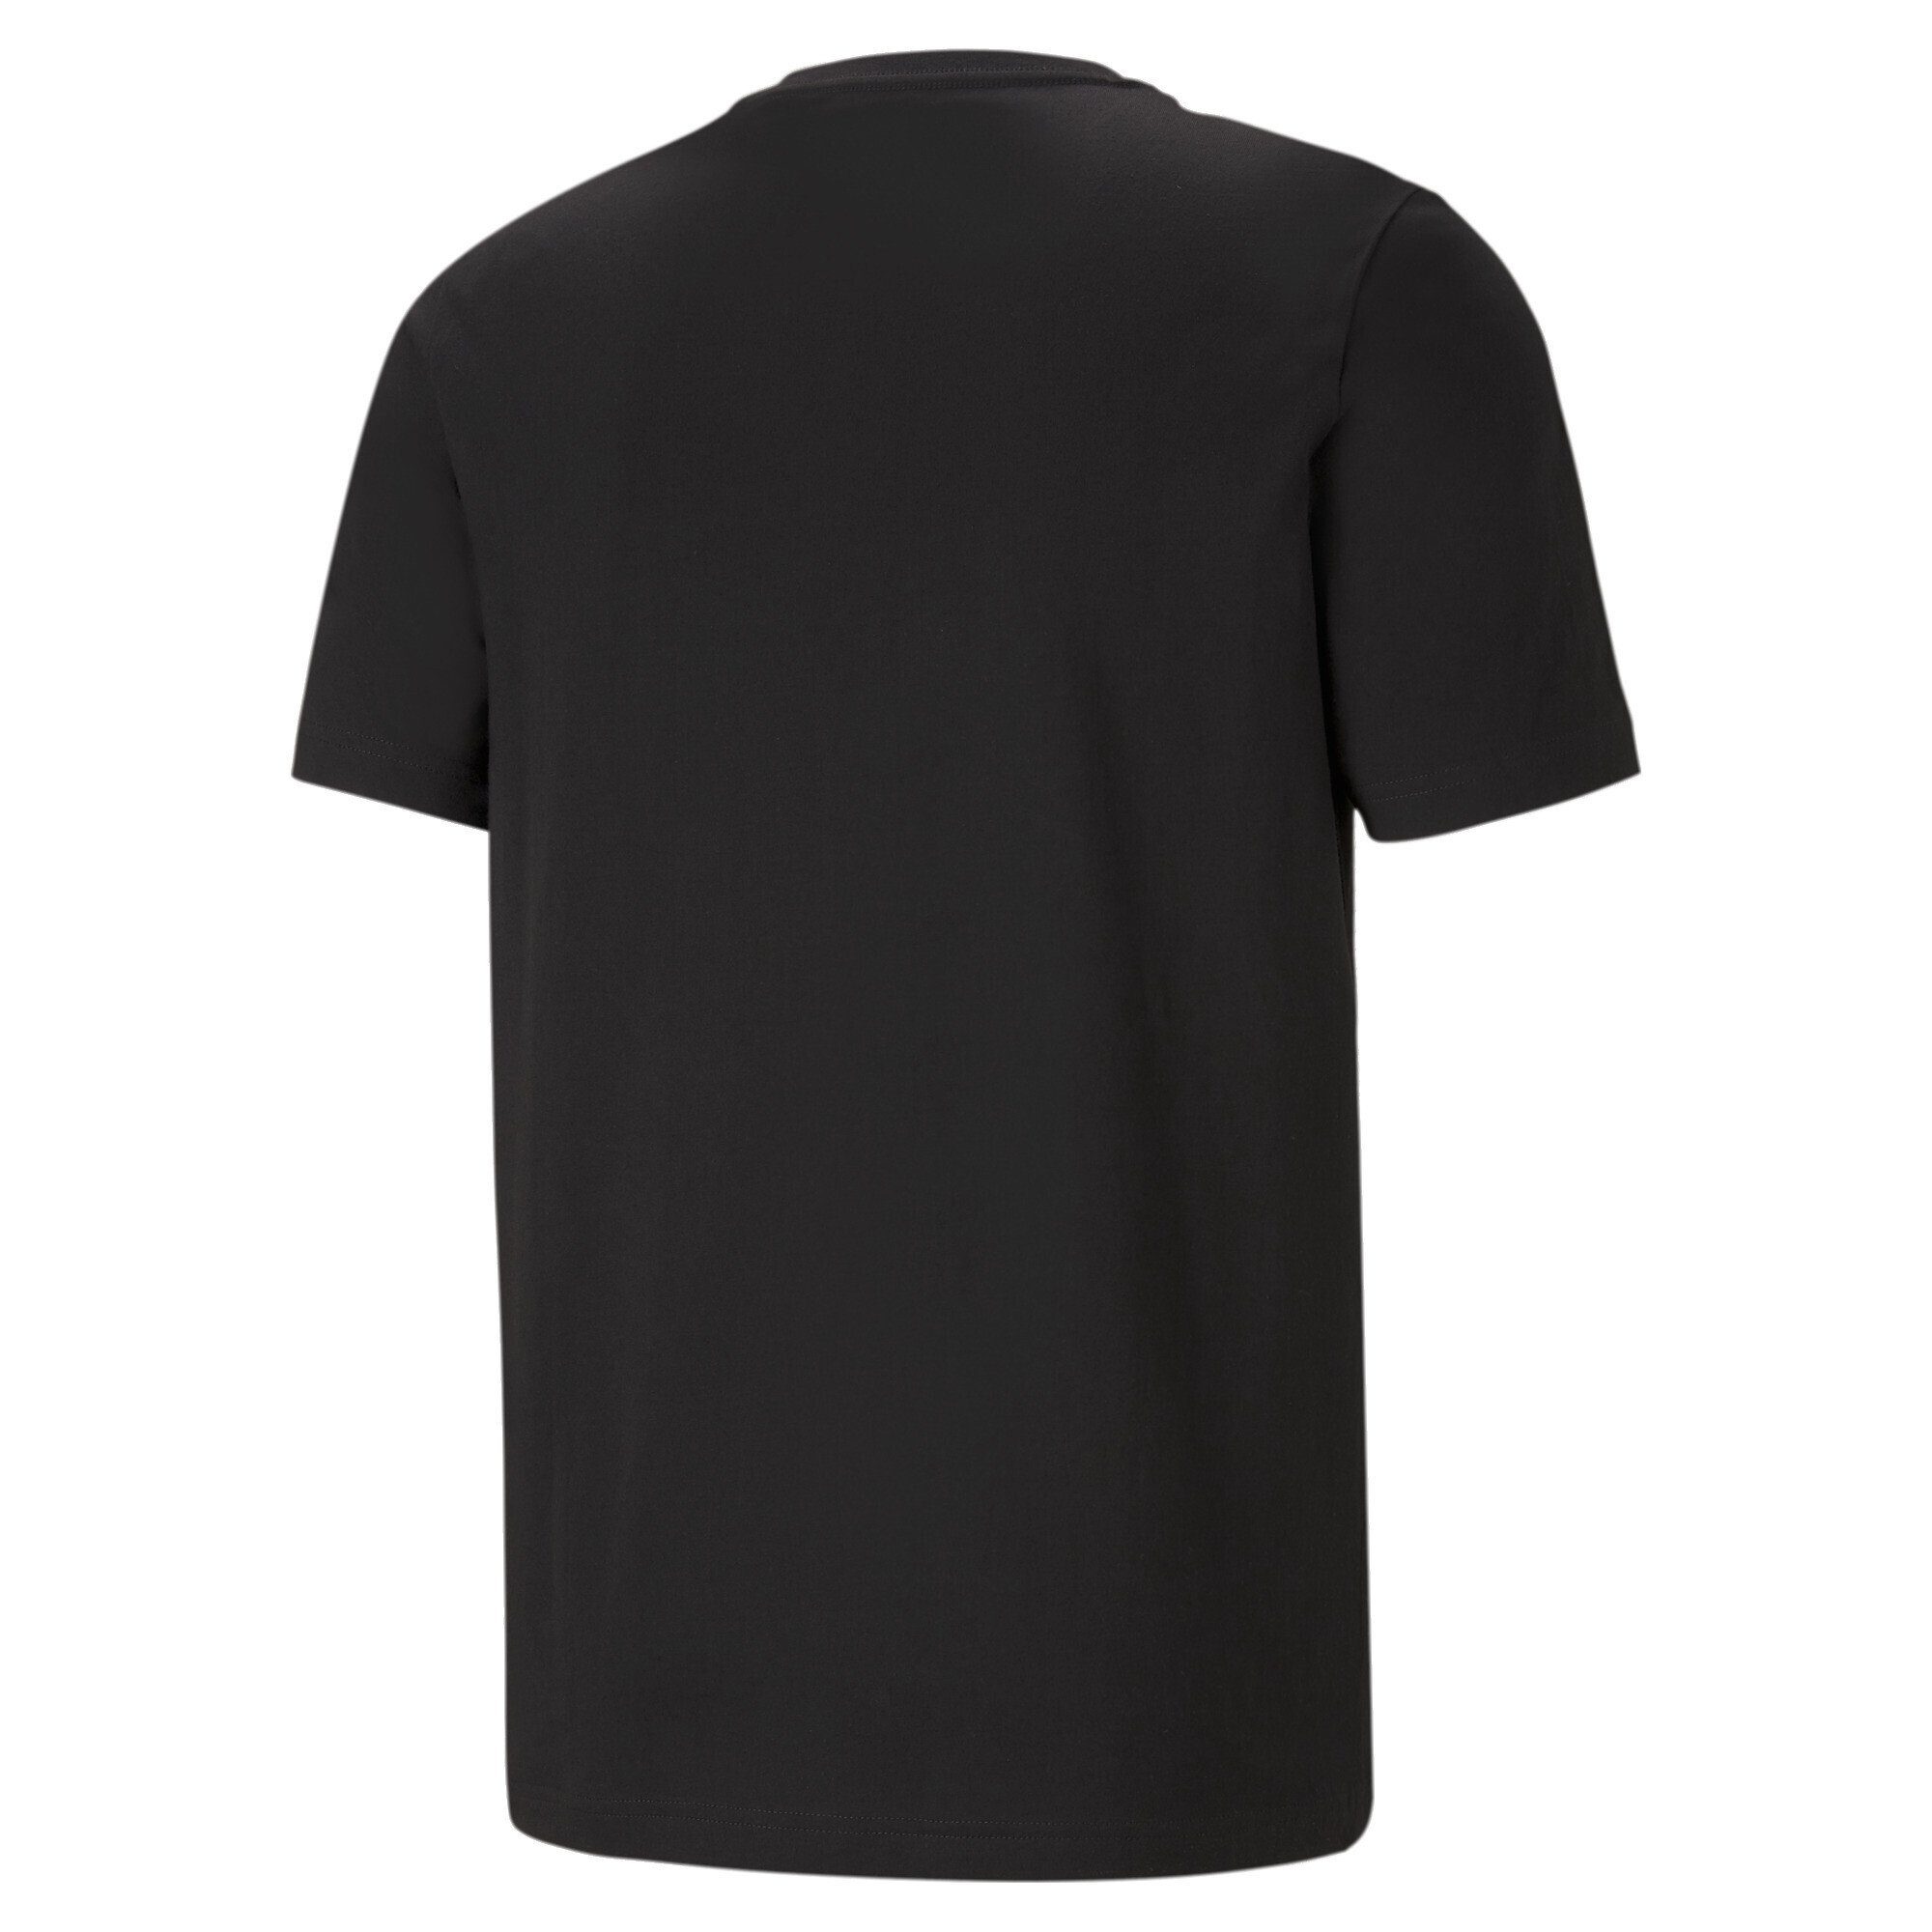 PUMA T-Shirt Logo Black Herren Essentials T-Shirt